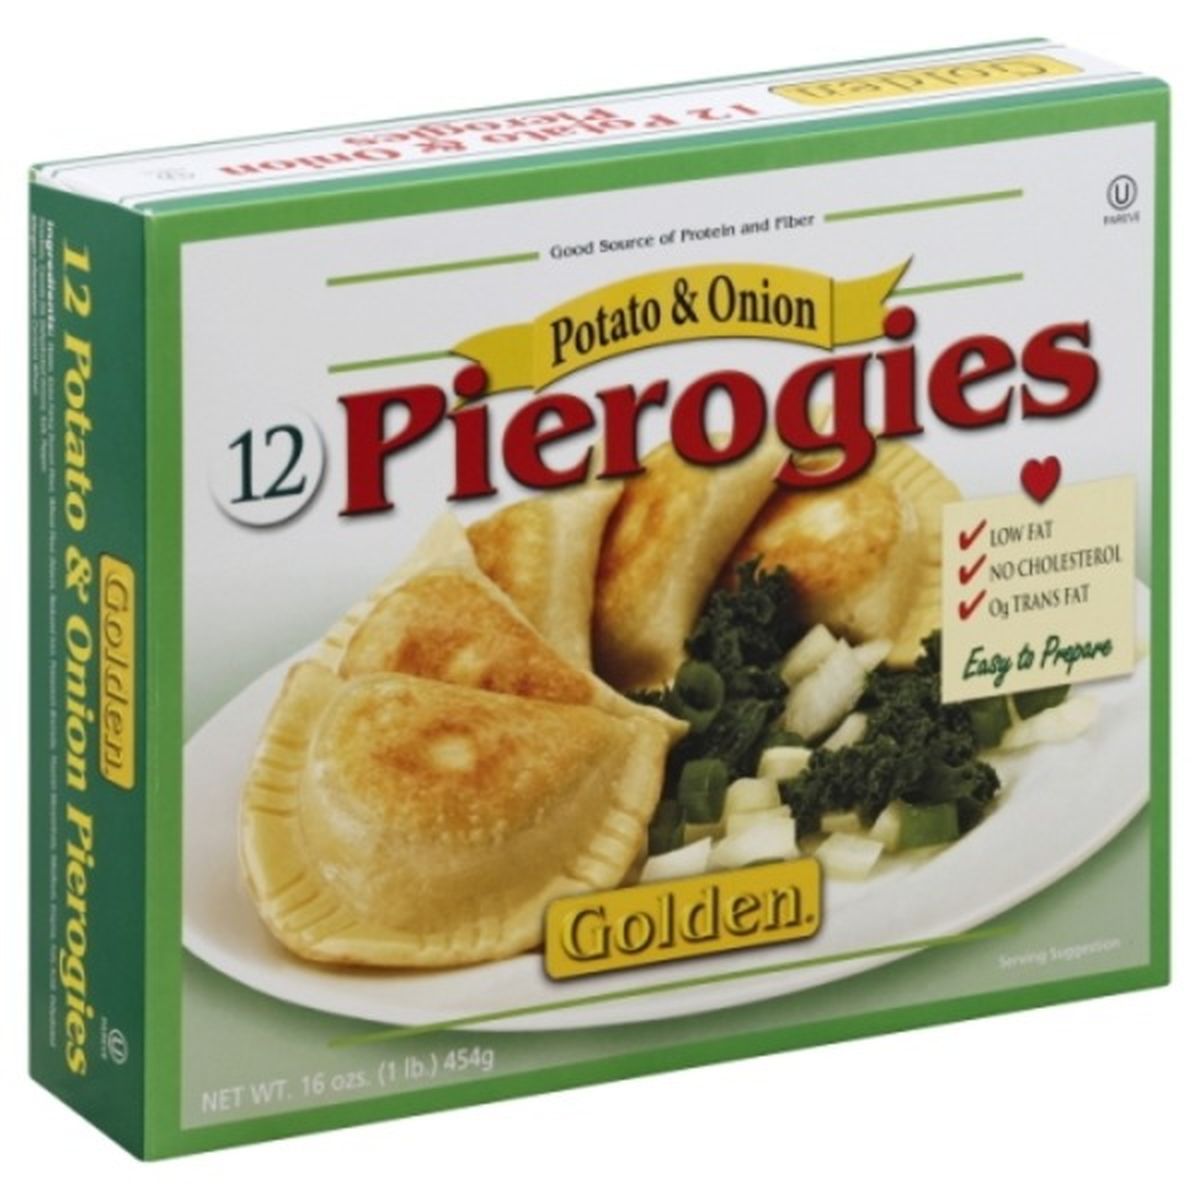 Calories in Golden Pierogies, Potato & Onion